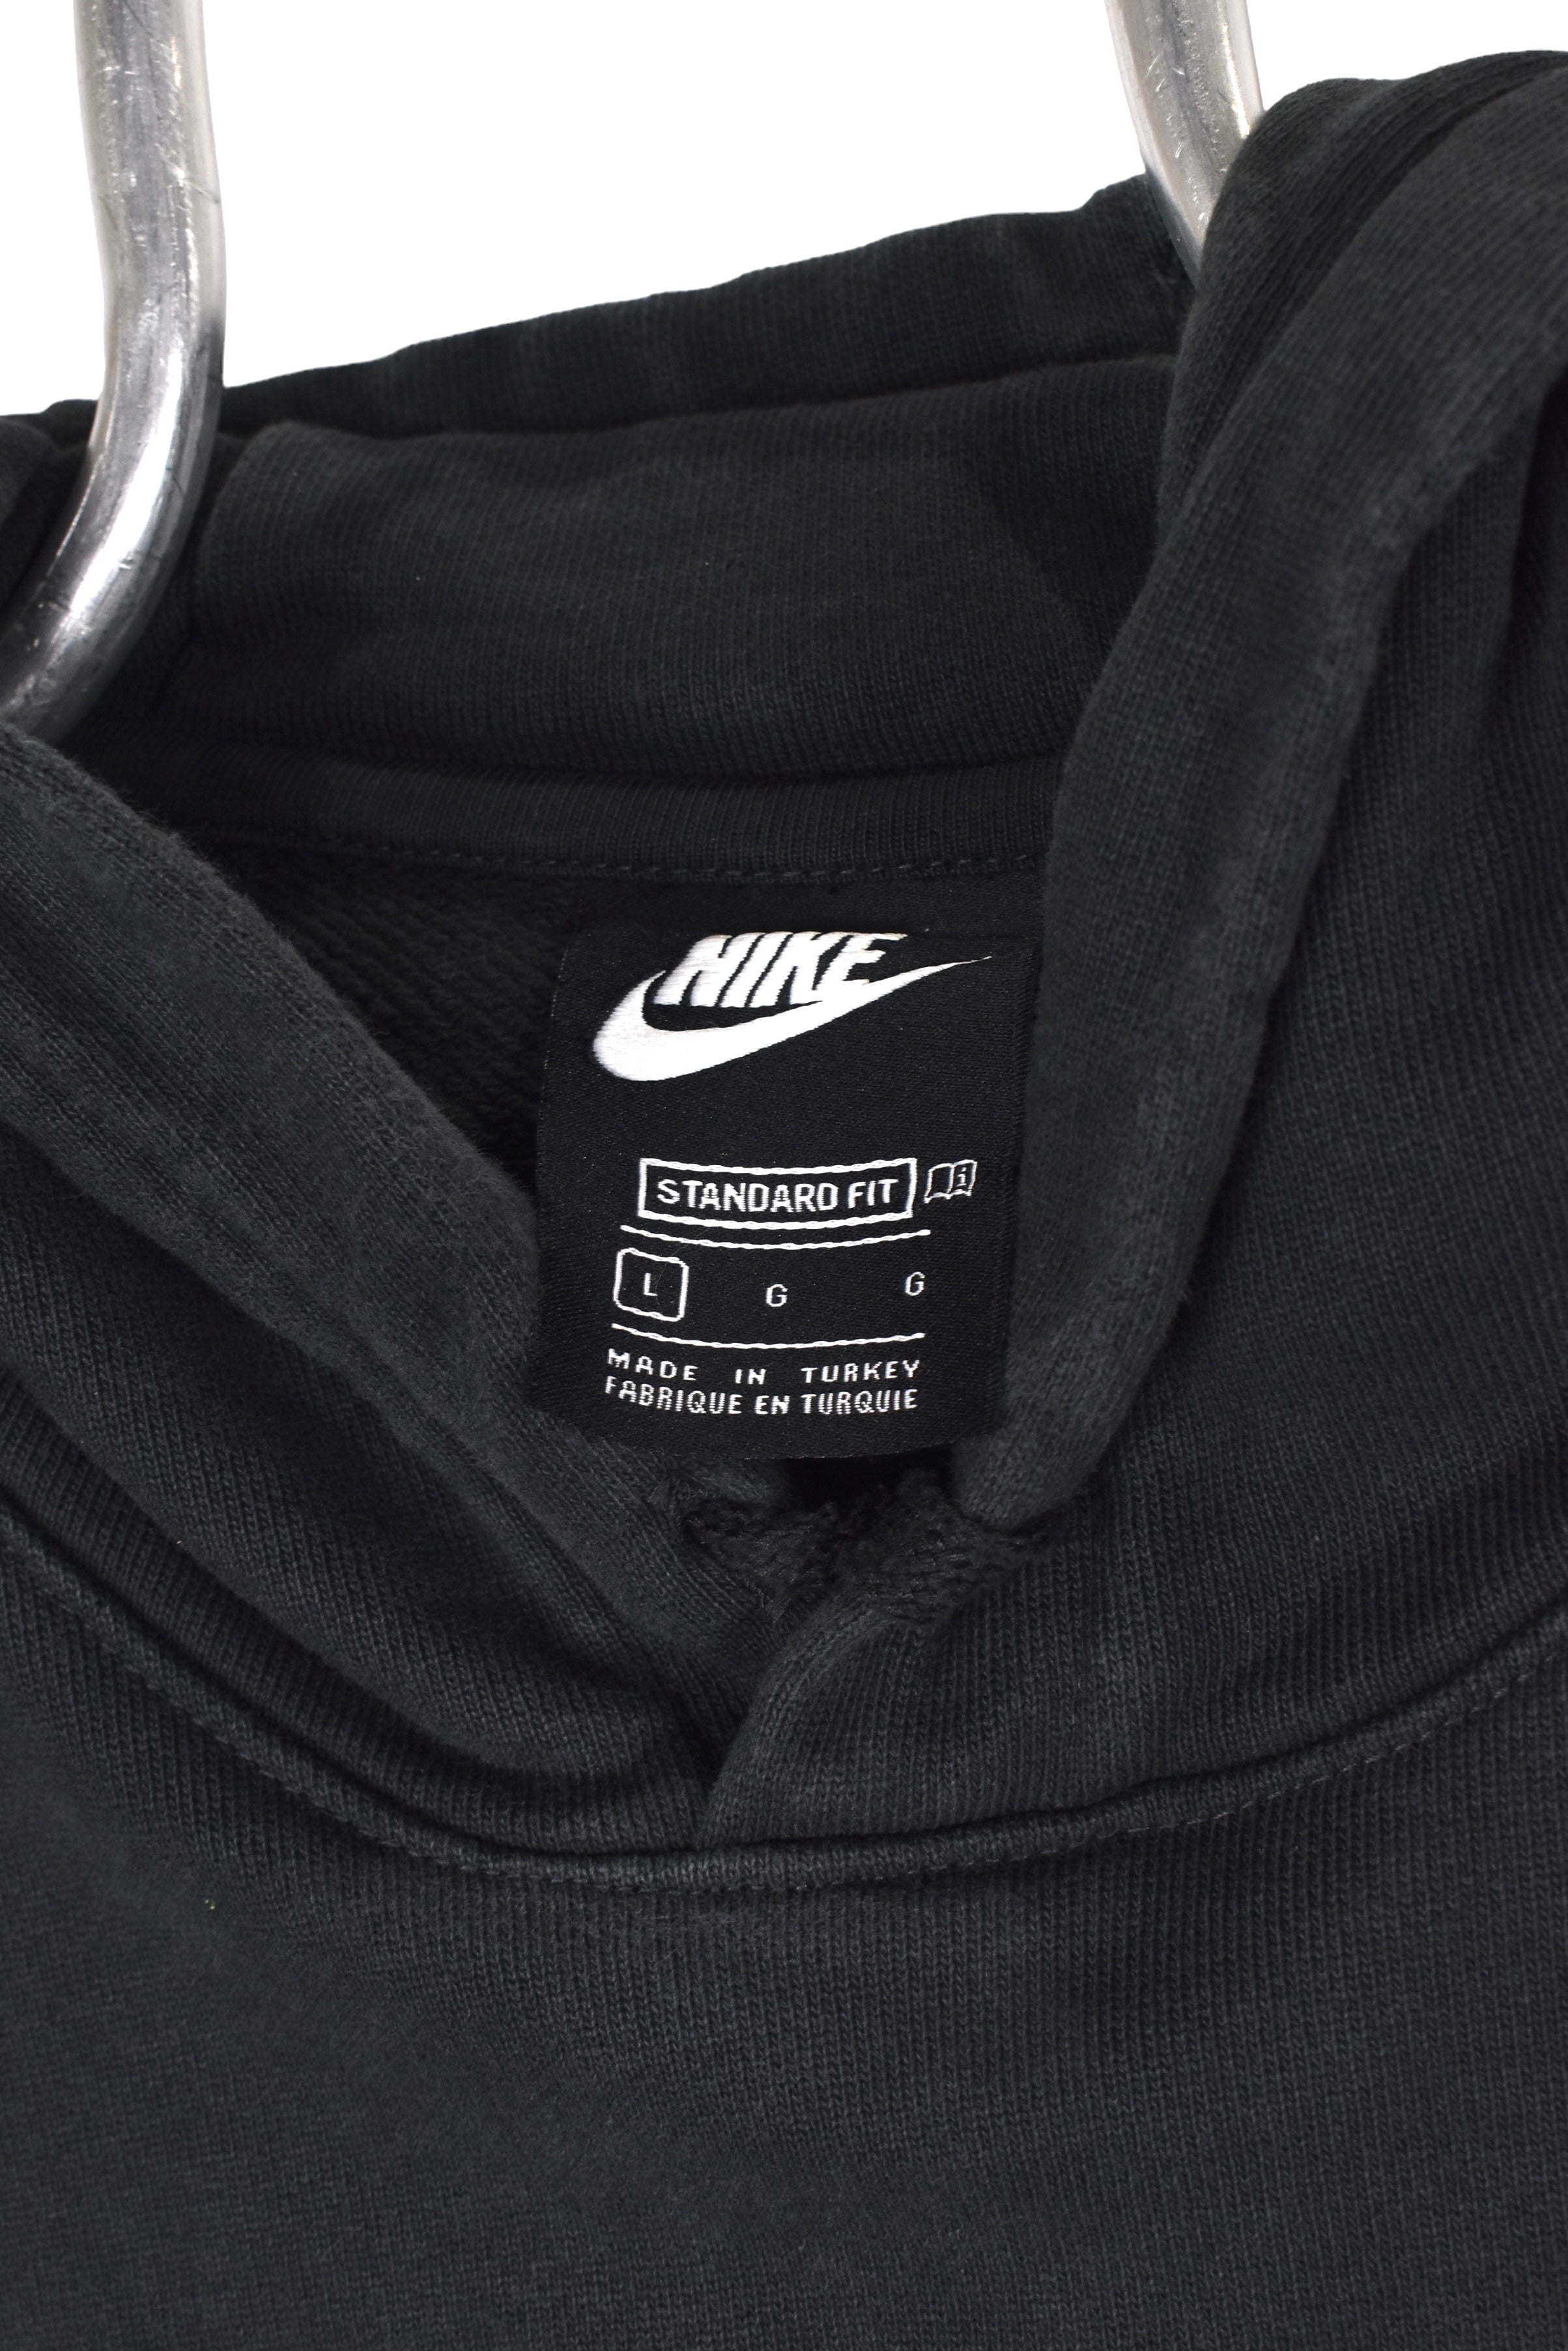 Vintage Nike hoodie, black embroidered sweatshirt - Large